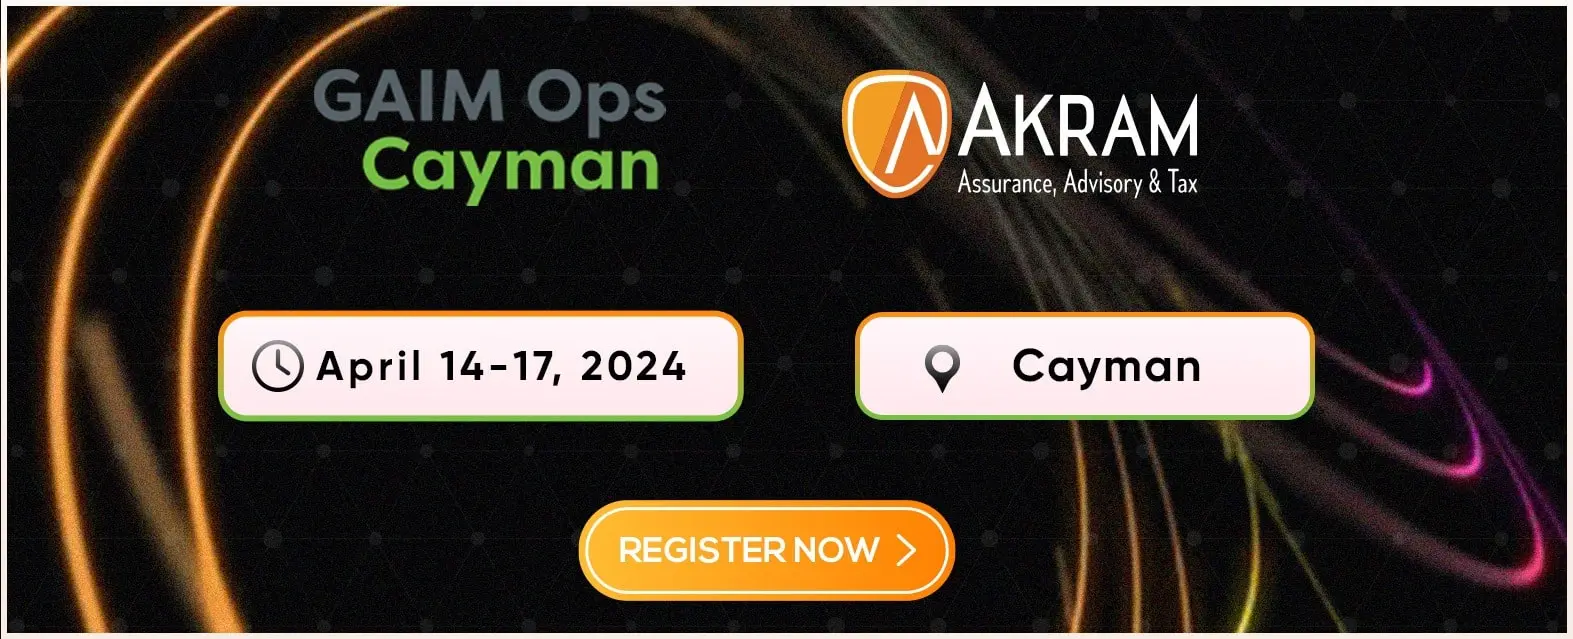 GAIM OPS CAYMAN Conference 2024